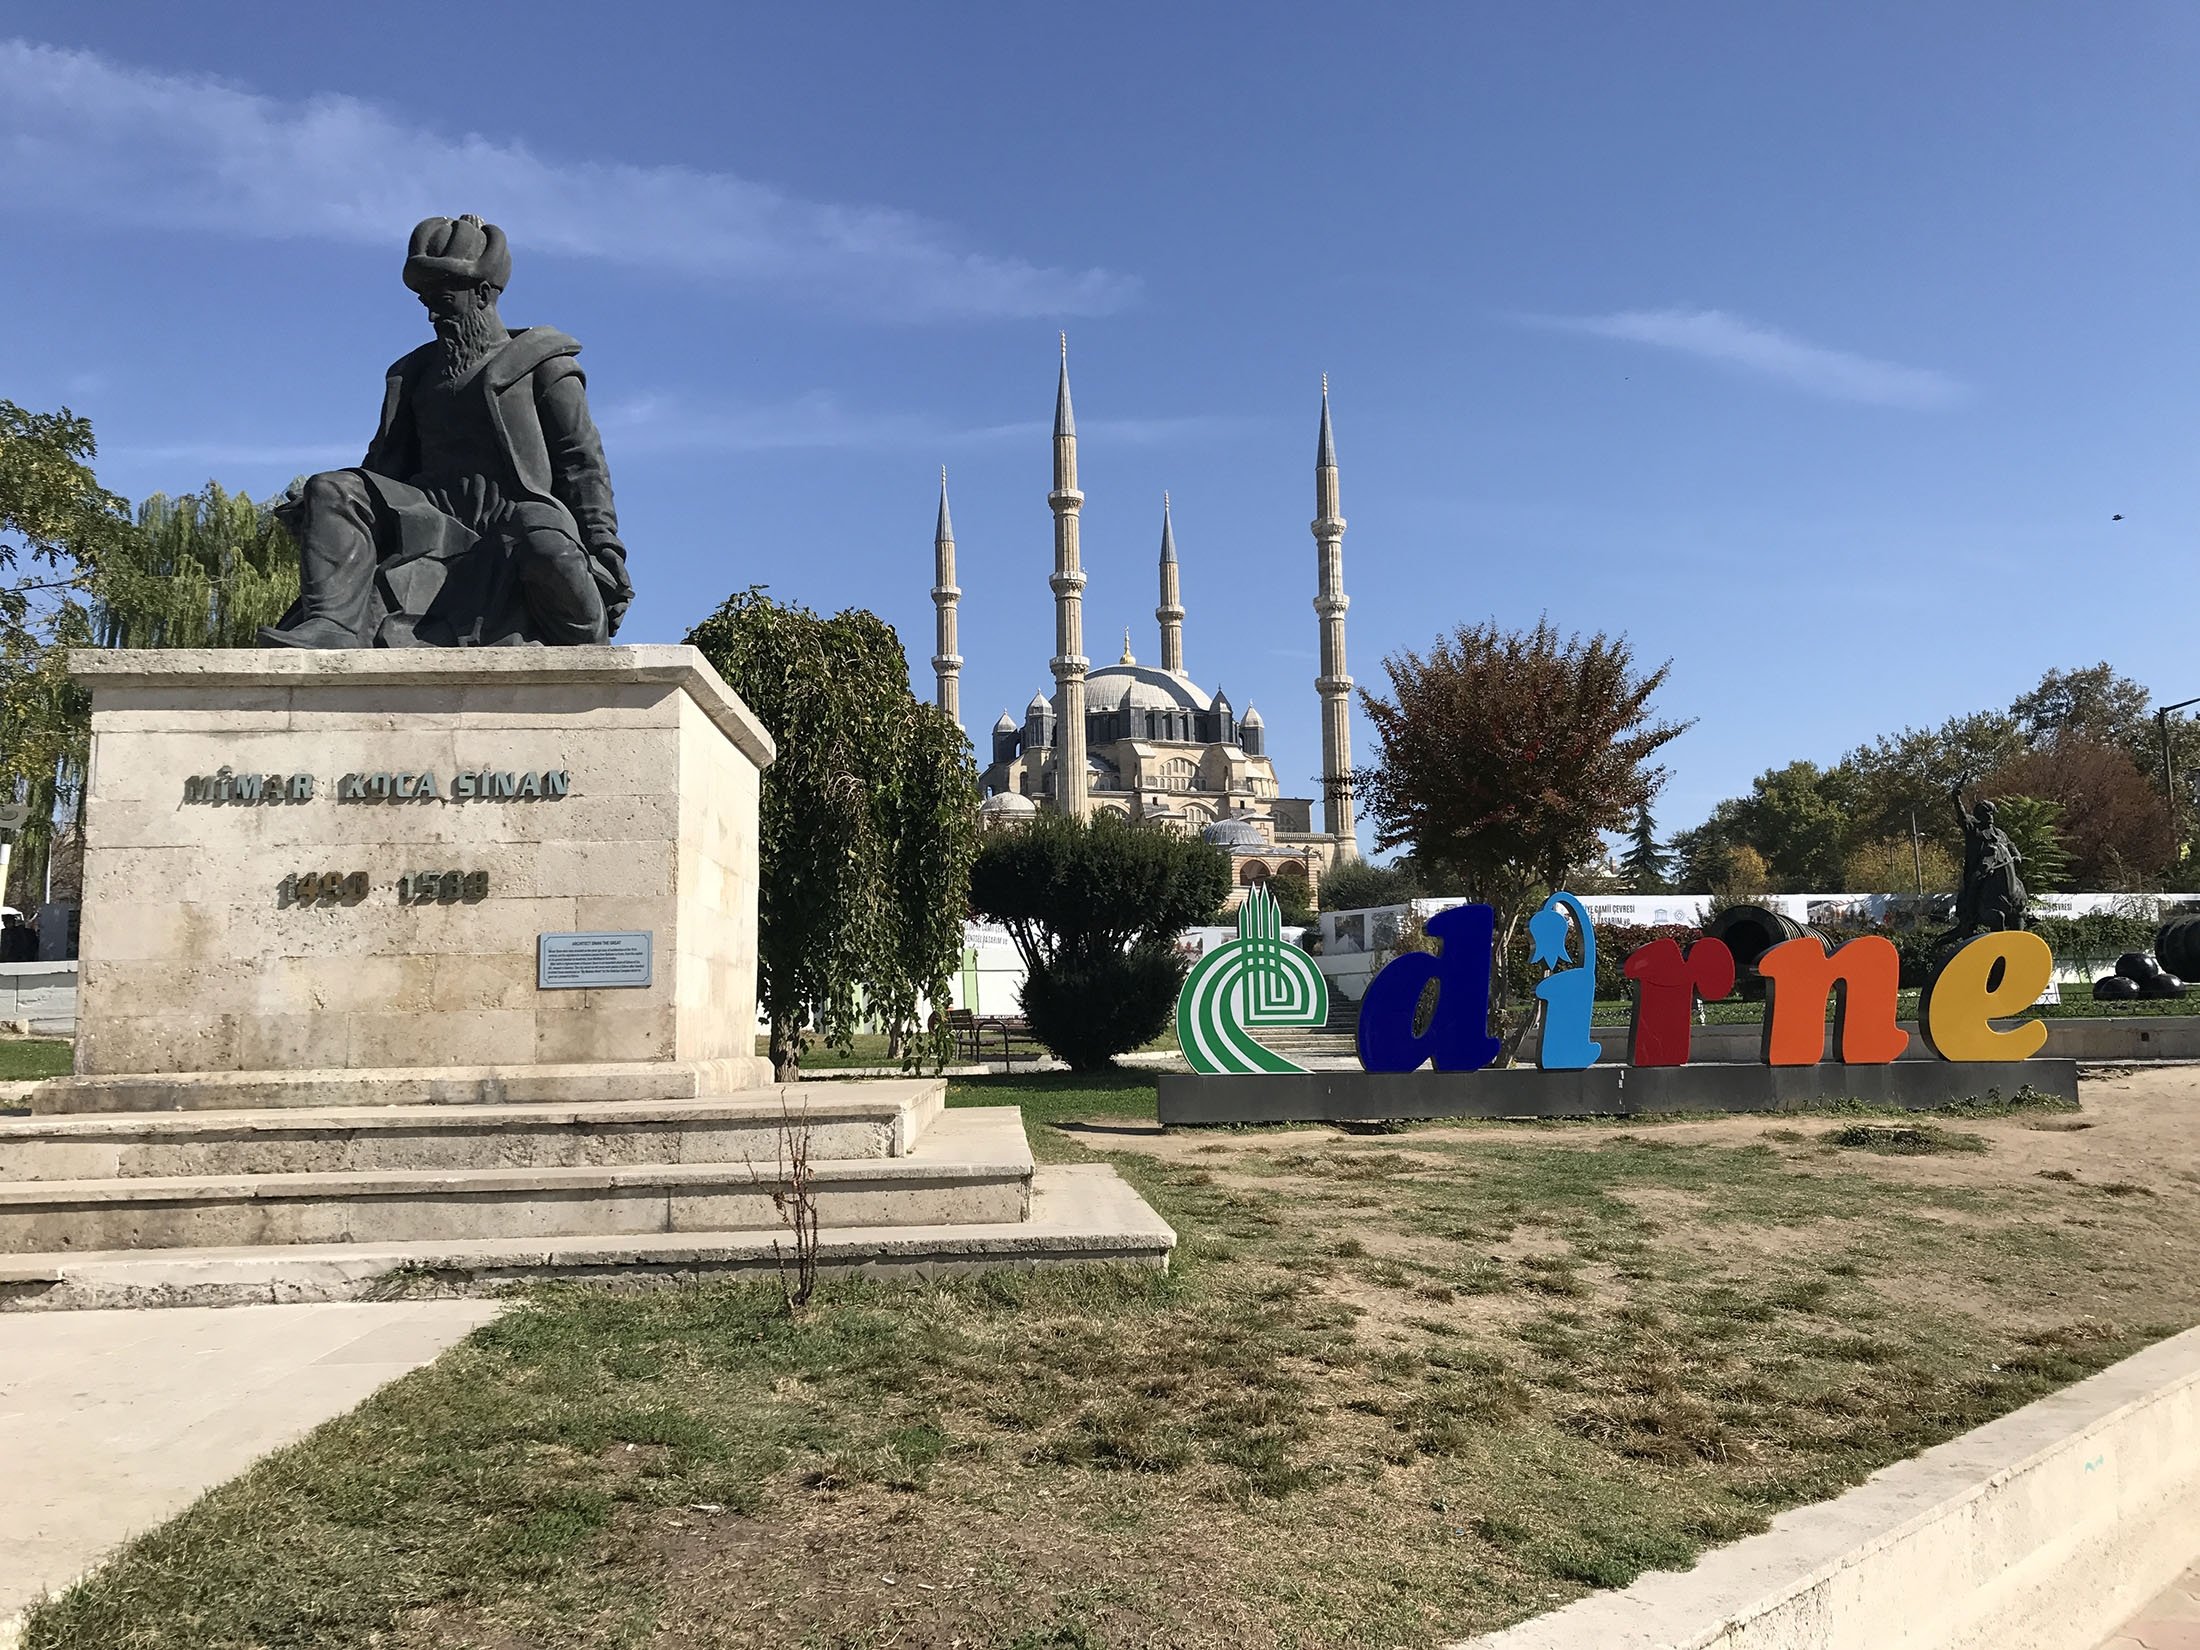 Patung arsitek Utsmaniyah Mimar Sinan dengan mahakarya Masjid Selimiye sebagai latar belakangnya.  (Foto oleh zge engelen)